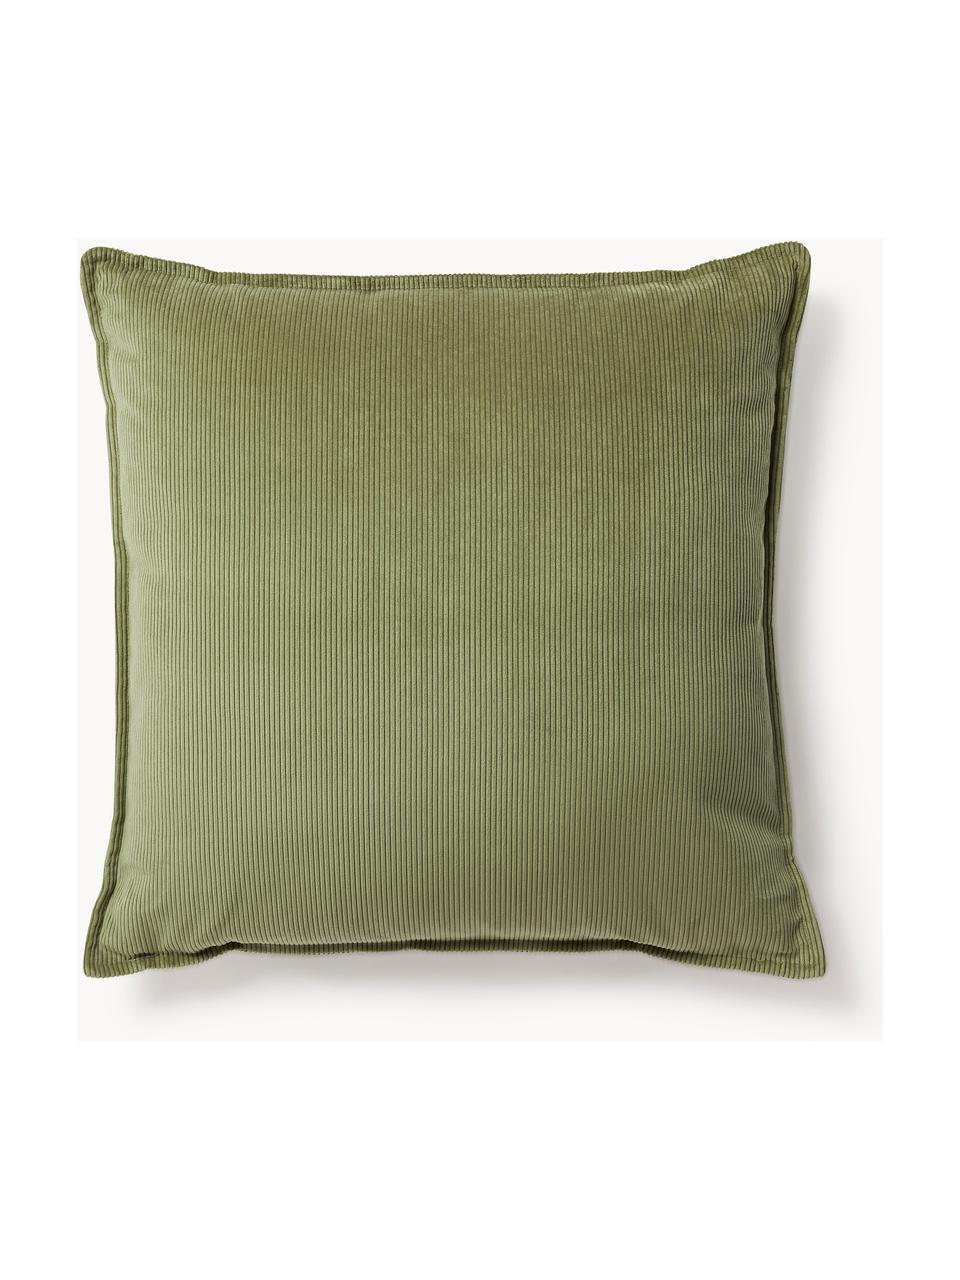 Cojín sofá de pana Lennon, Funda: 92% poliéster, 8% poliami, Pana verde oliva, An 70 x L 70 cm